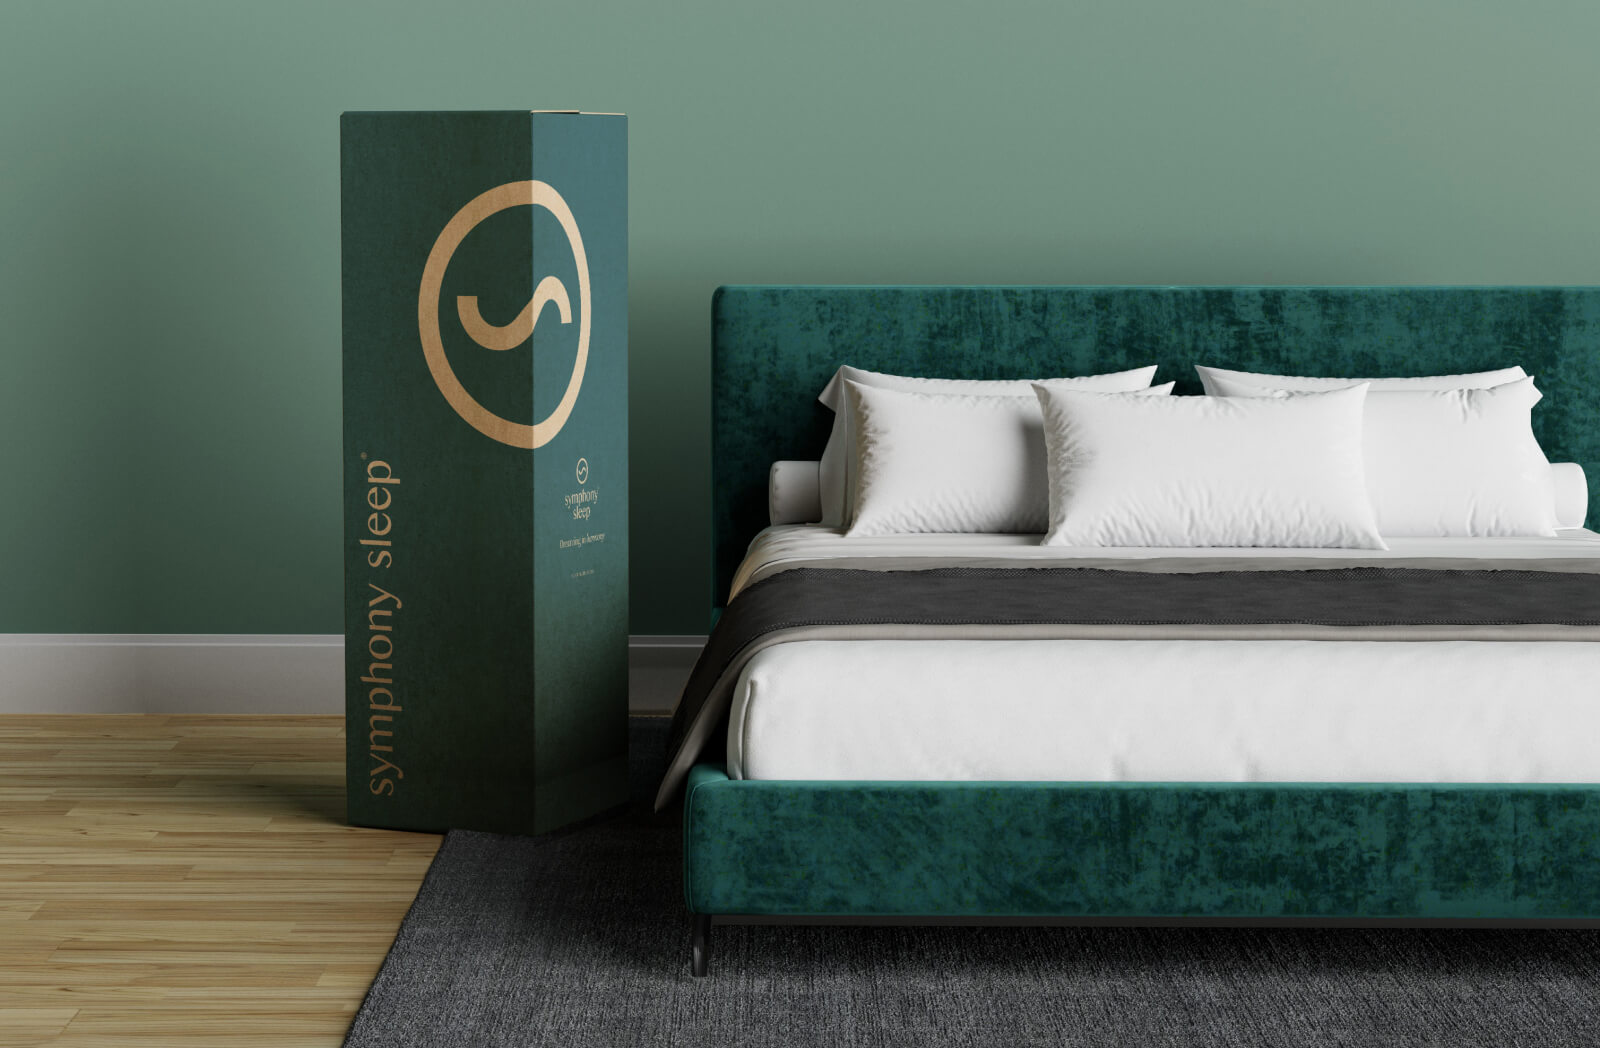 DD.NYC® designed brand identity and packaging for Symphony Sleep - Innovative Sleep Technologies